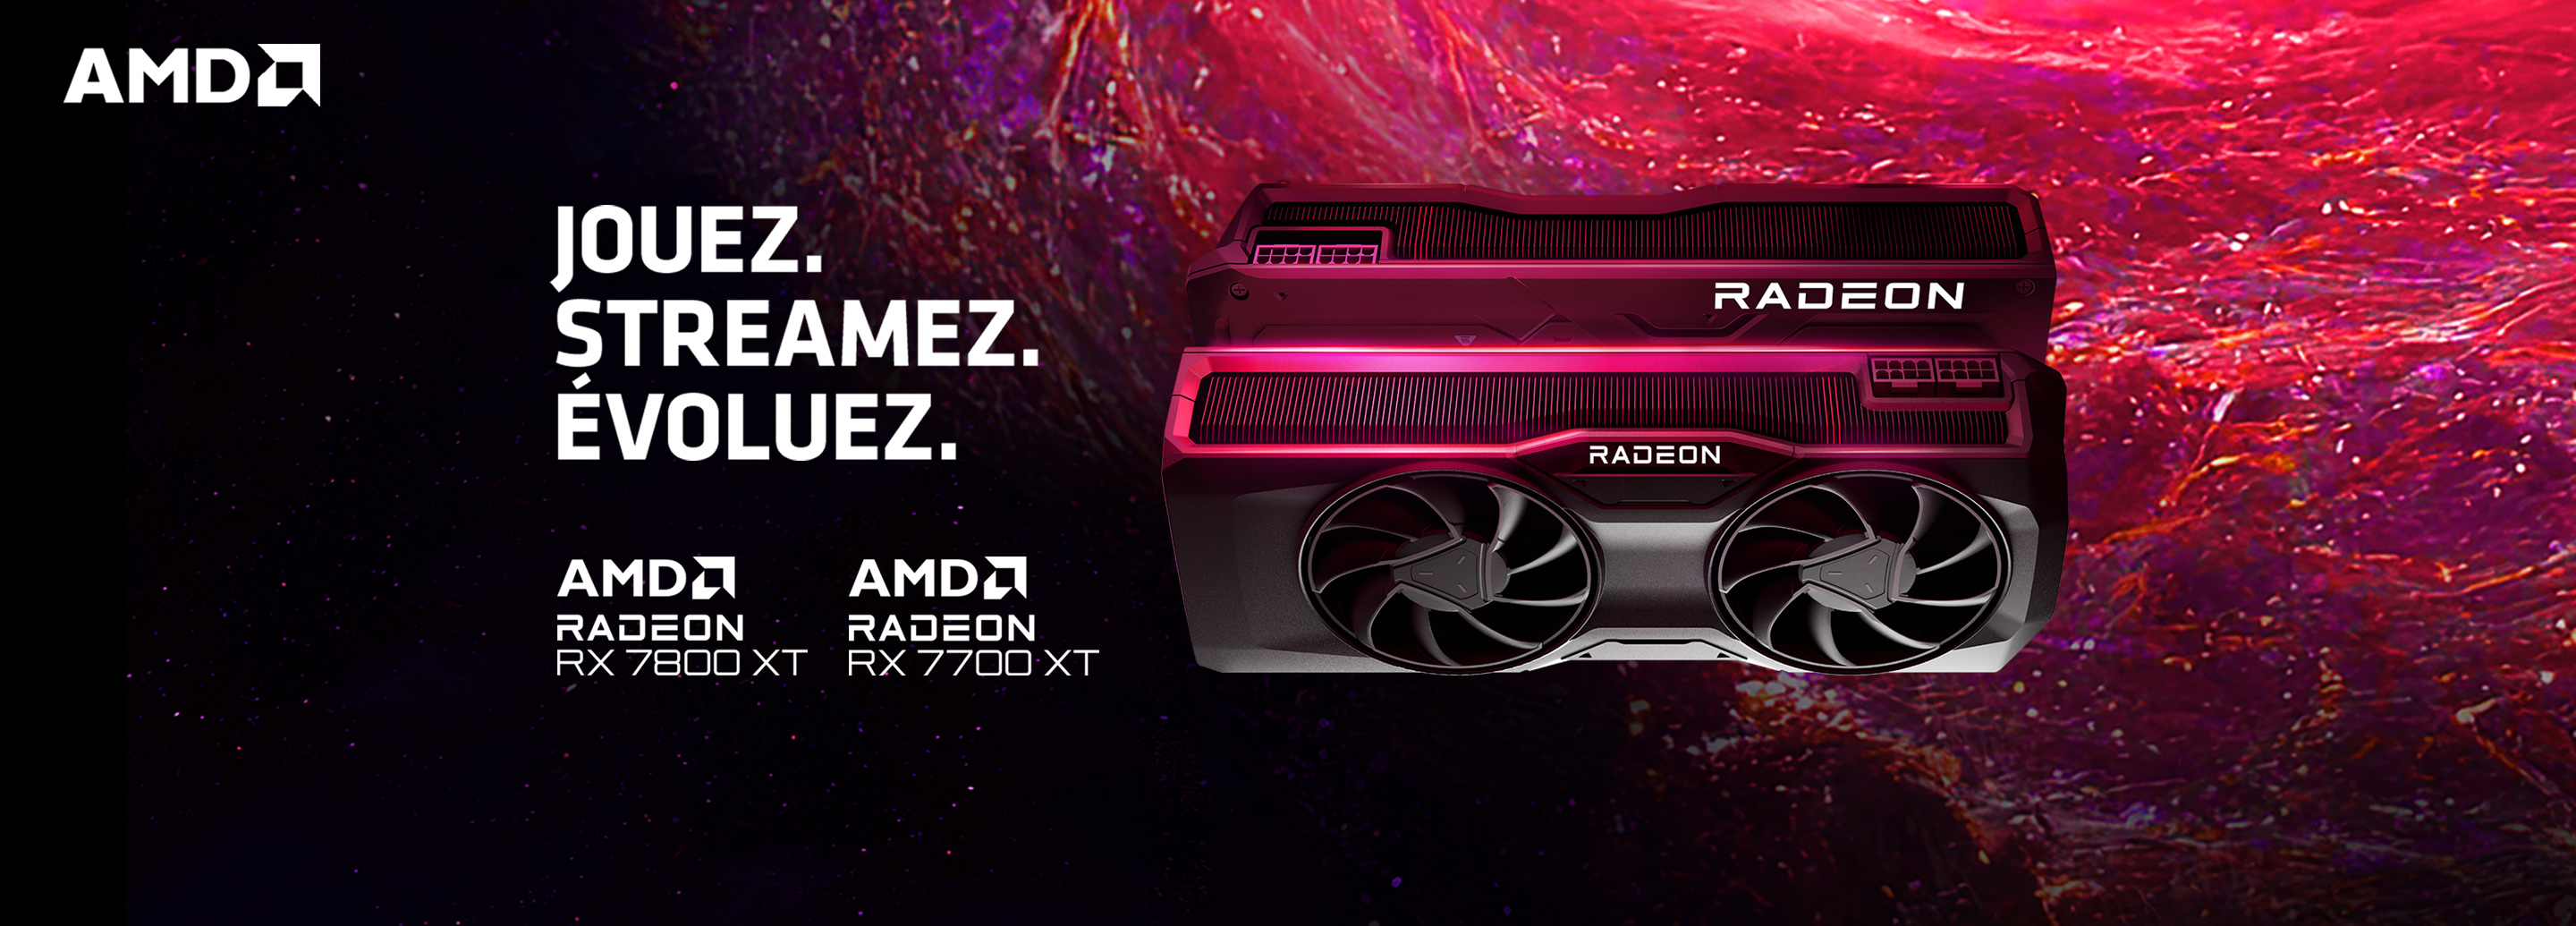 AMD launch